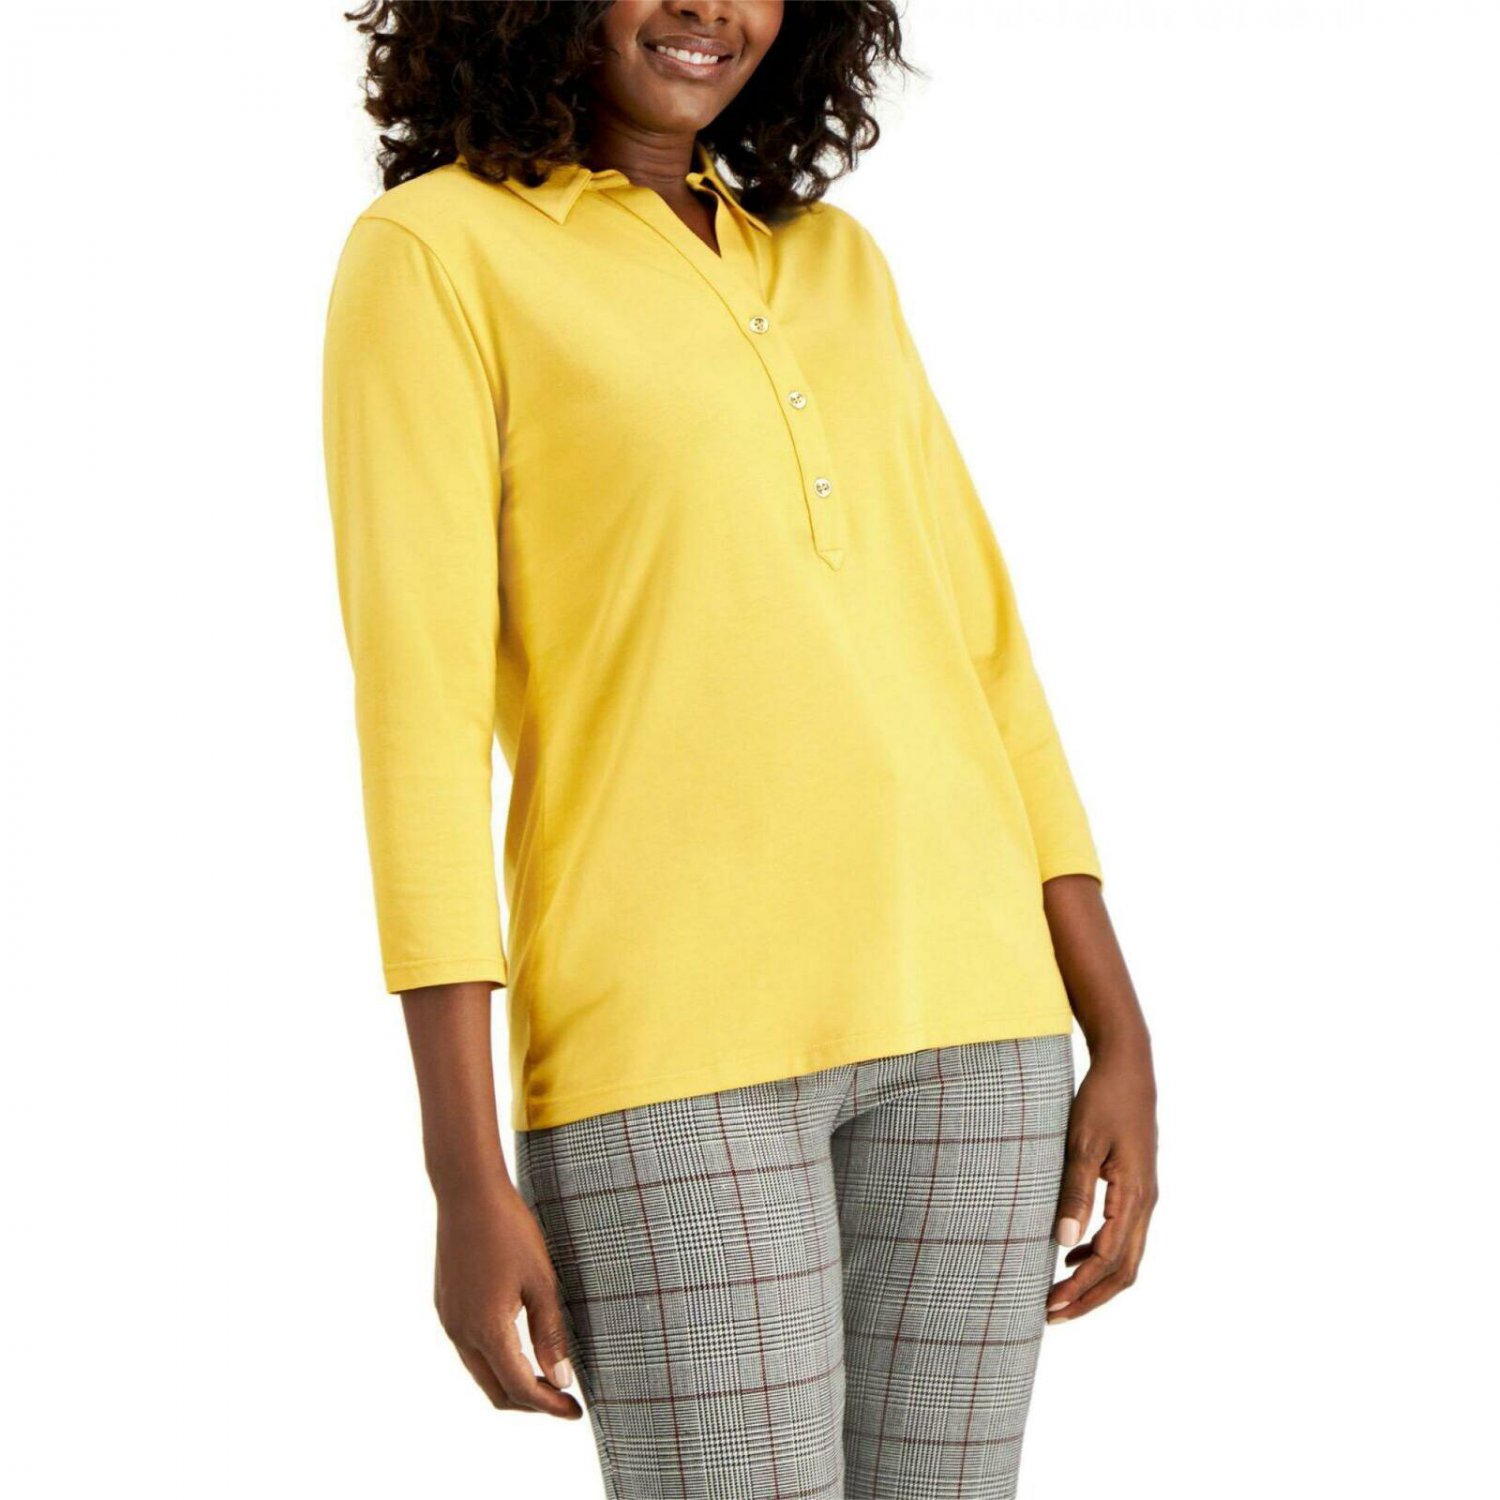 Charter Club Women's Supima Cotton 3/4-Sleeve Jersey Knit Polo Shirt Small Honey Glaze Gold